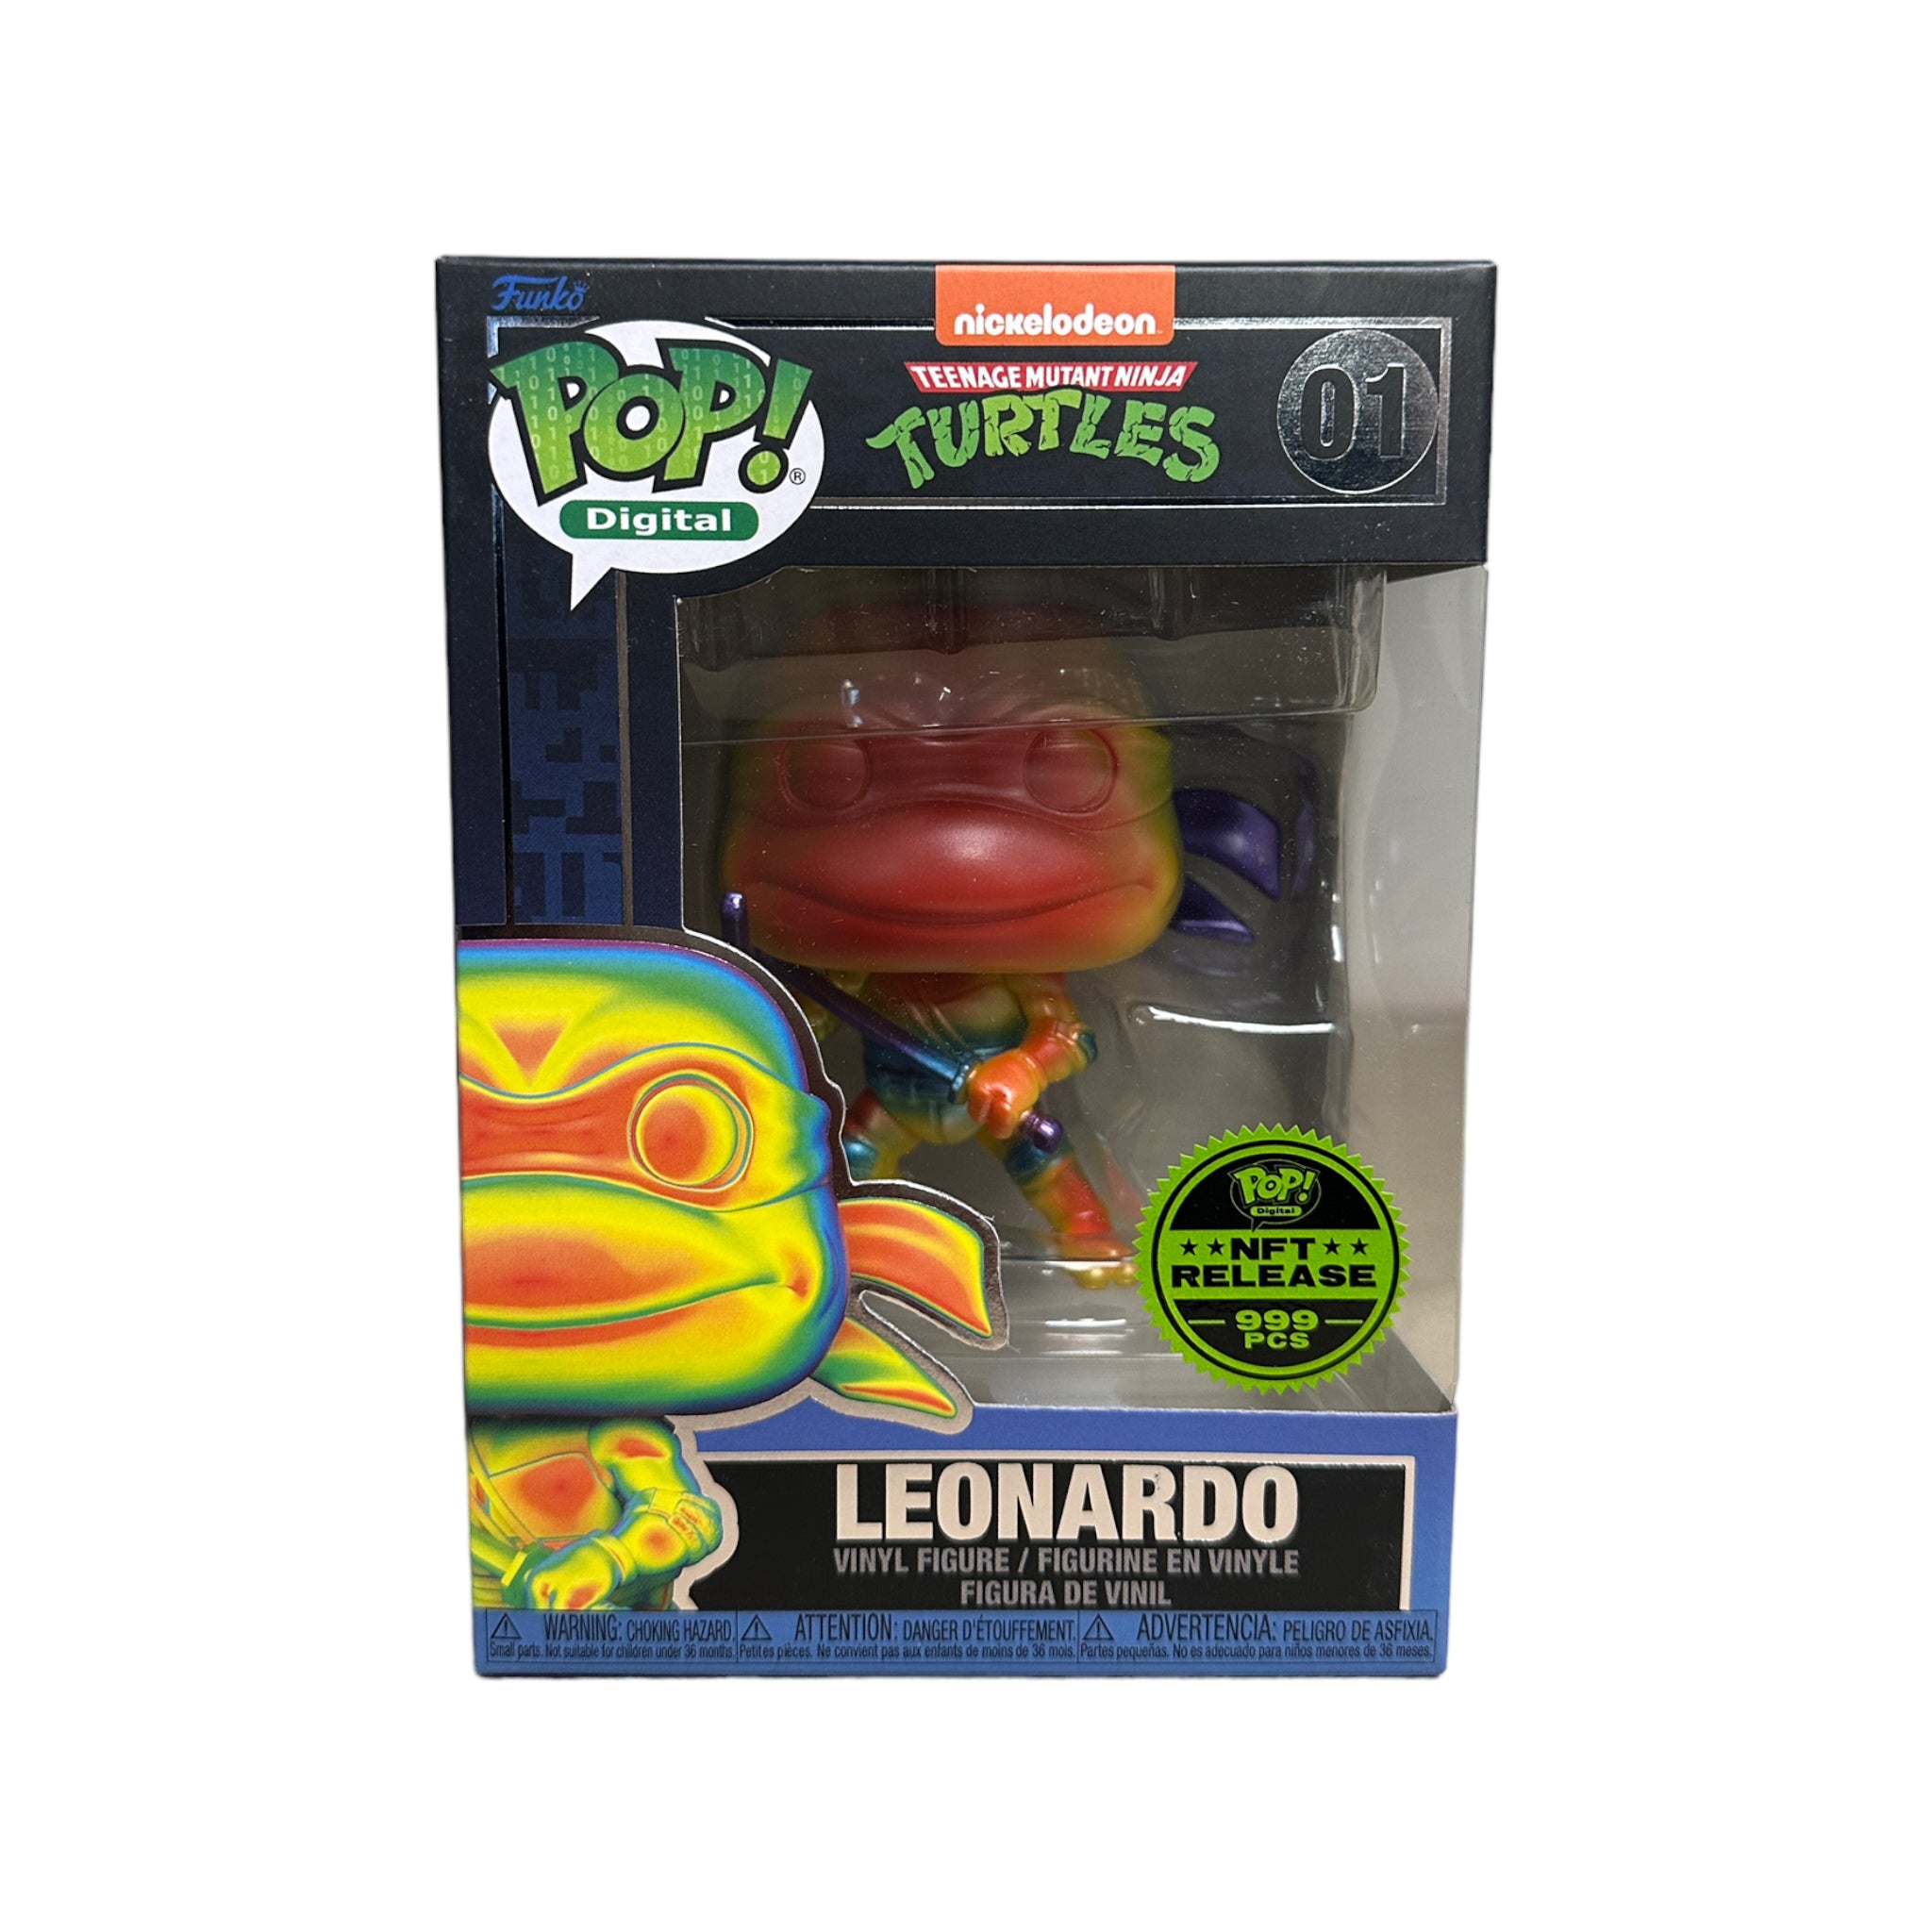 Leonardo #01 Funko Pop! - Teenage Mutant Ninja Turtles - NFT Release Exclusive LE999 Pcs - Condition 9.5/10